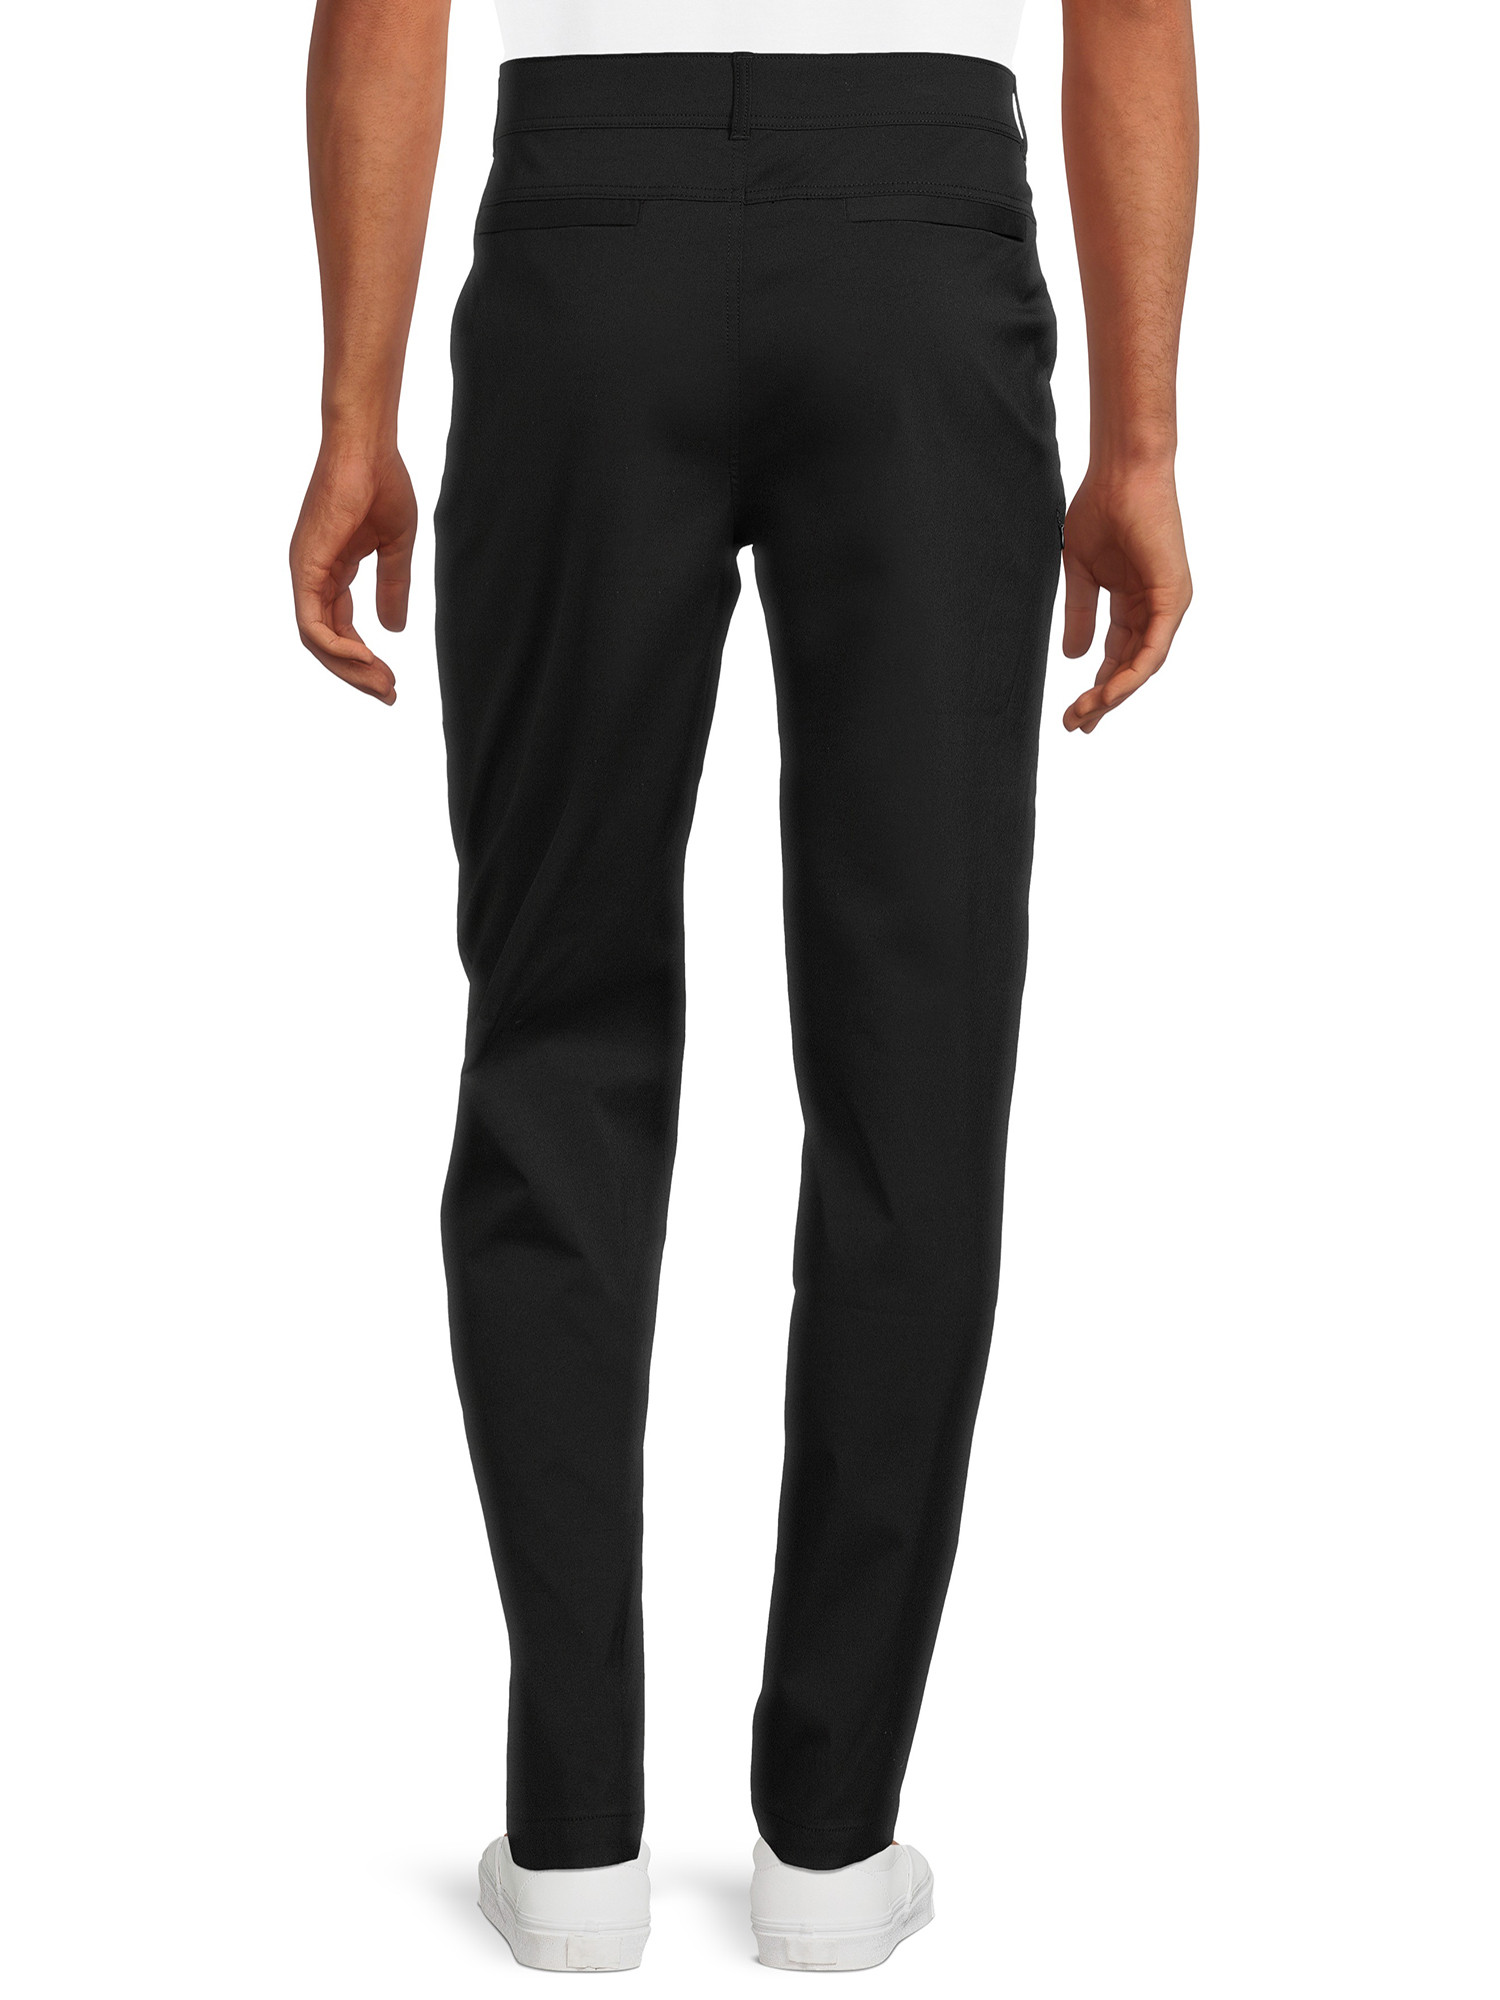 George Men's Synthetic Casual Pants - Walmart.com